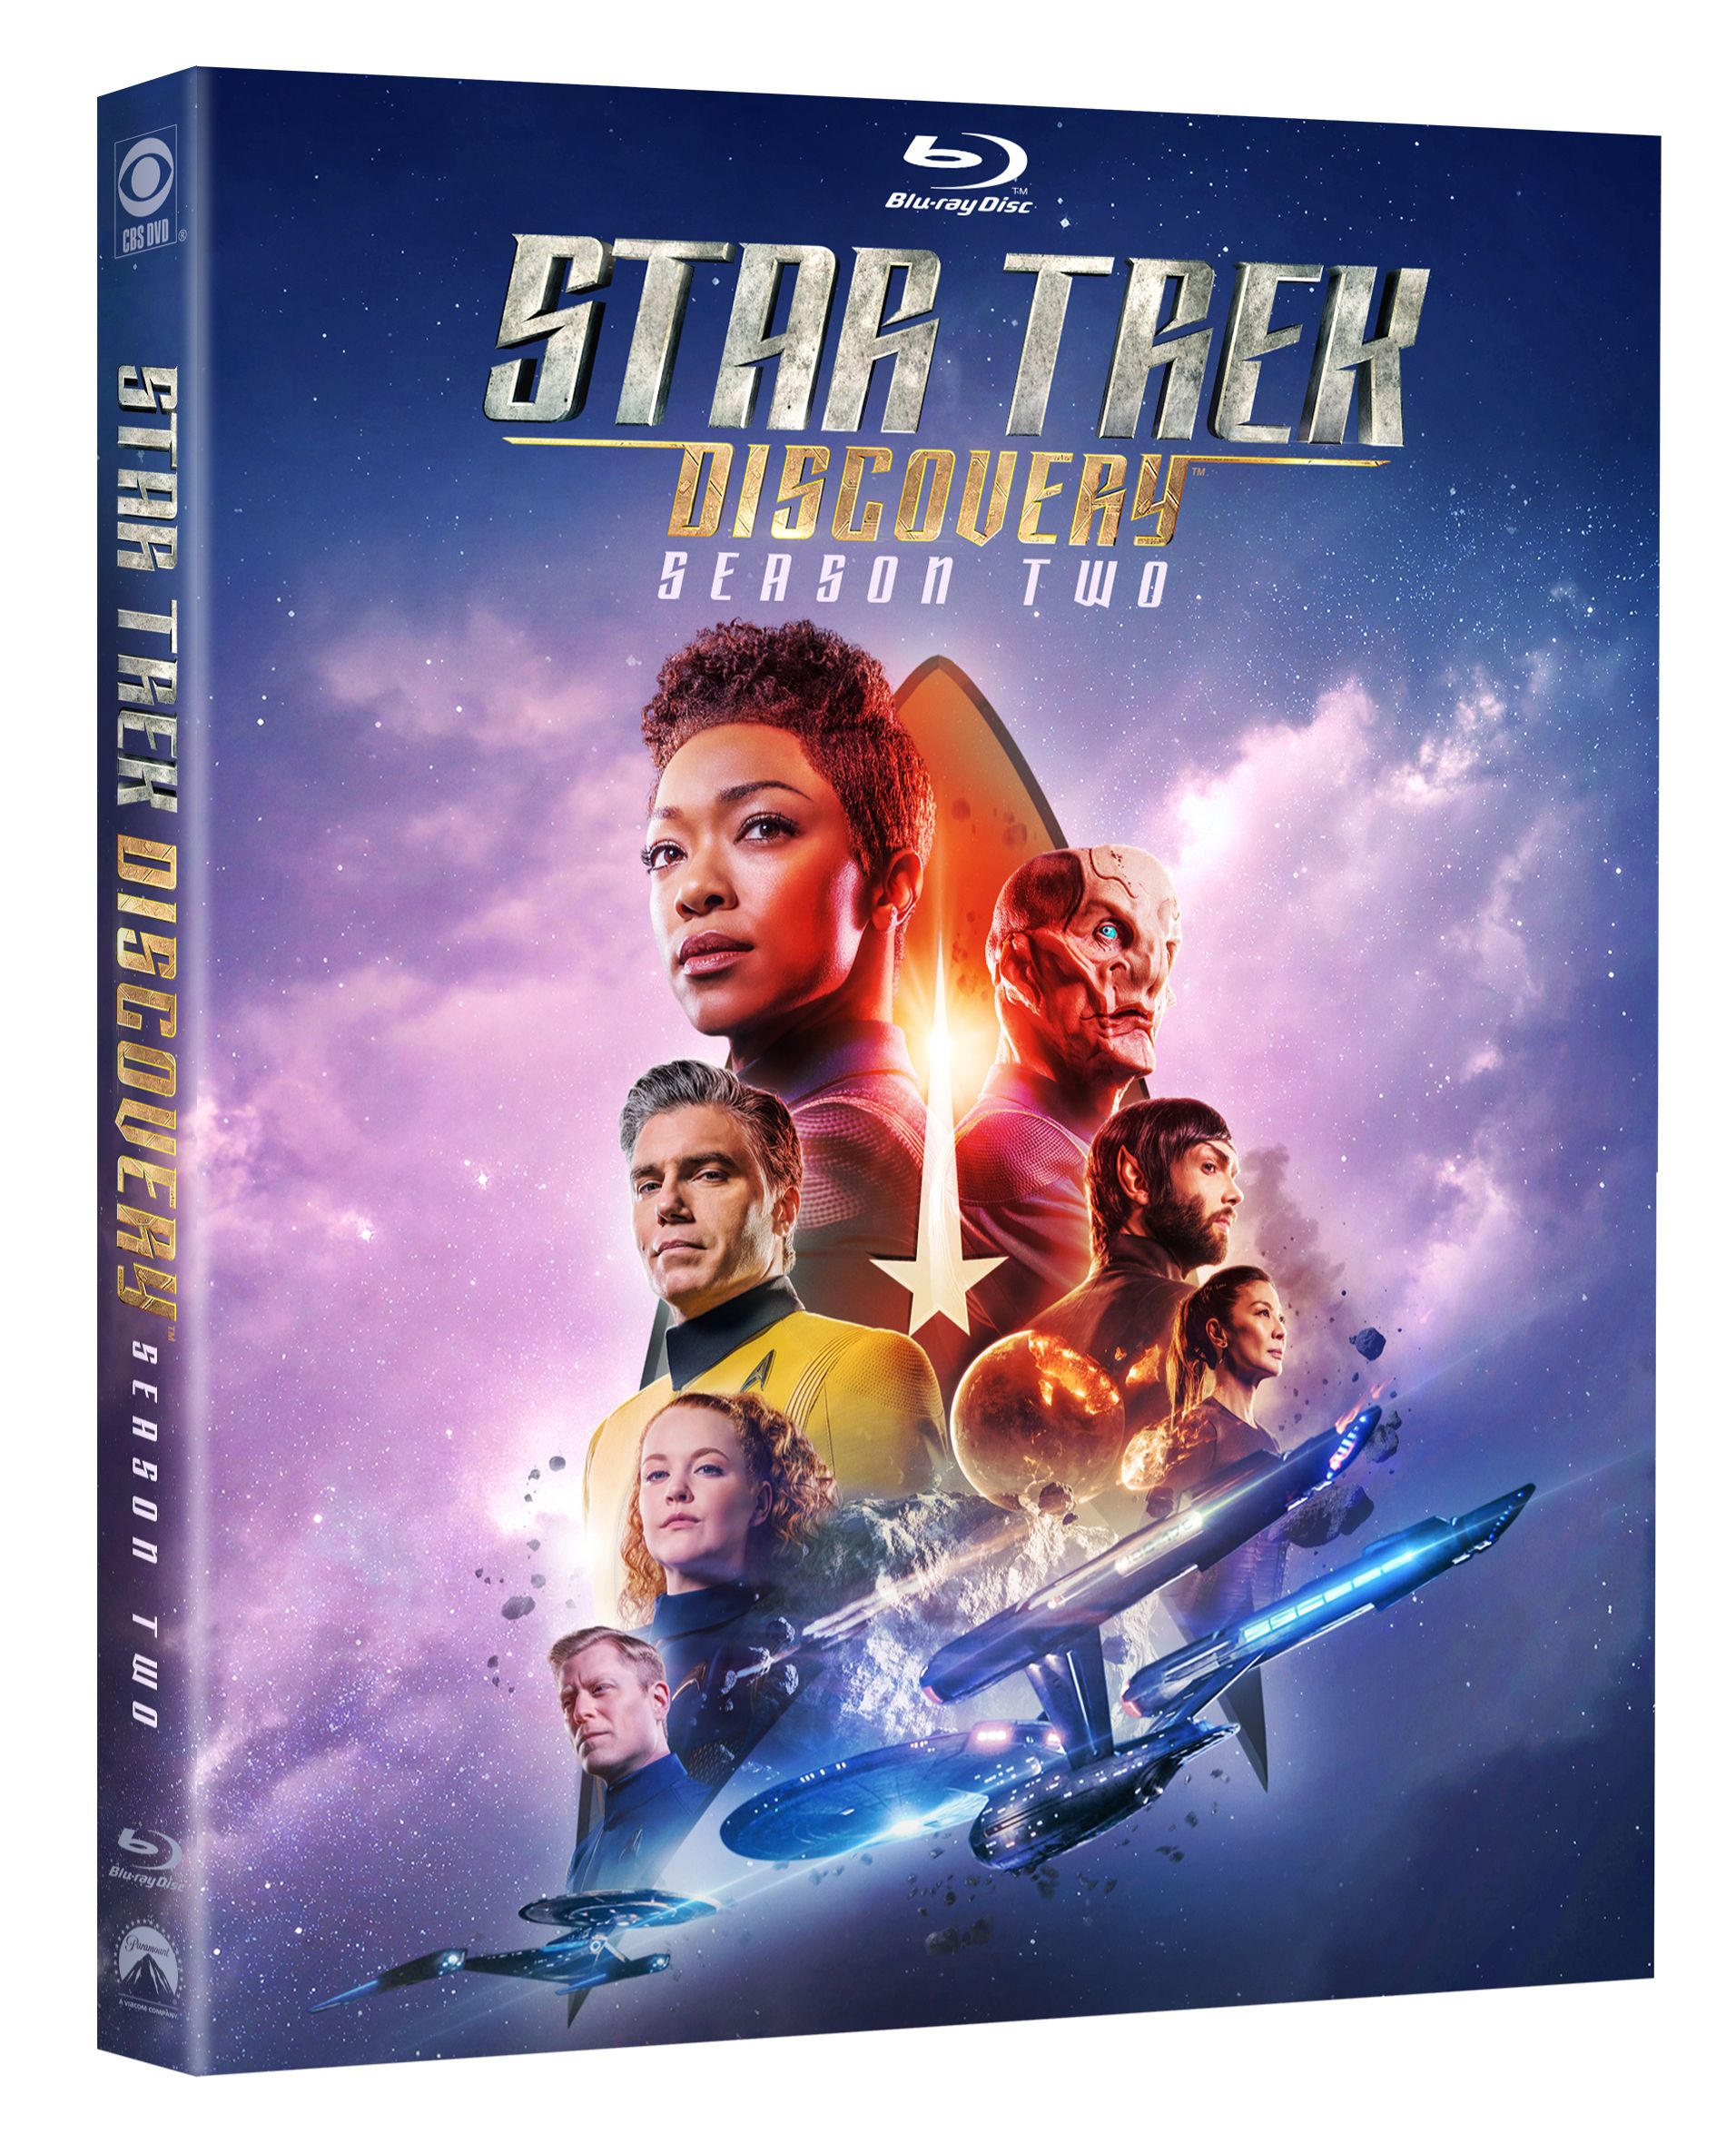 Star Trek: Discovery Season 2 Blu-ray